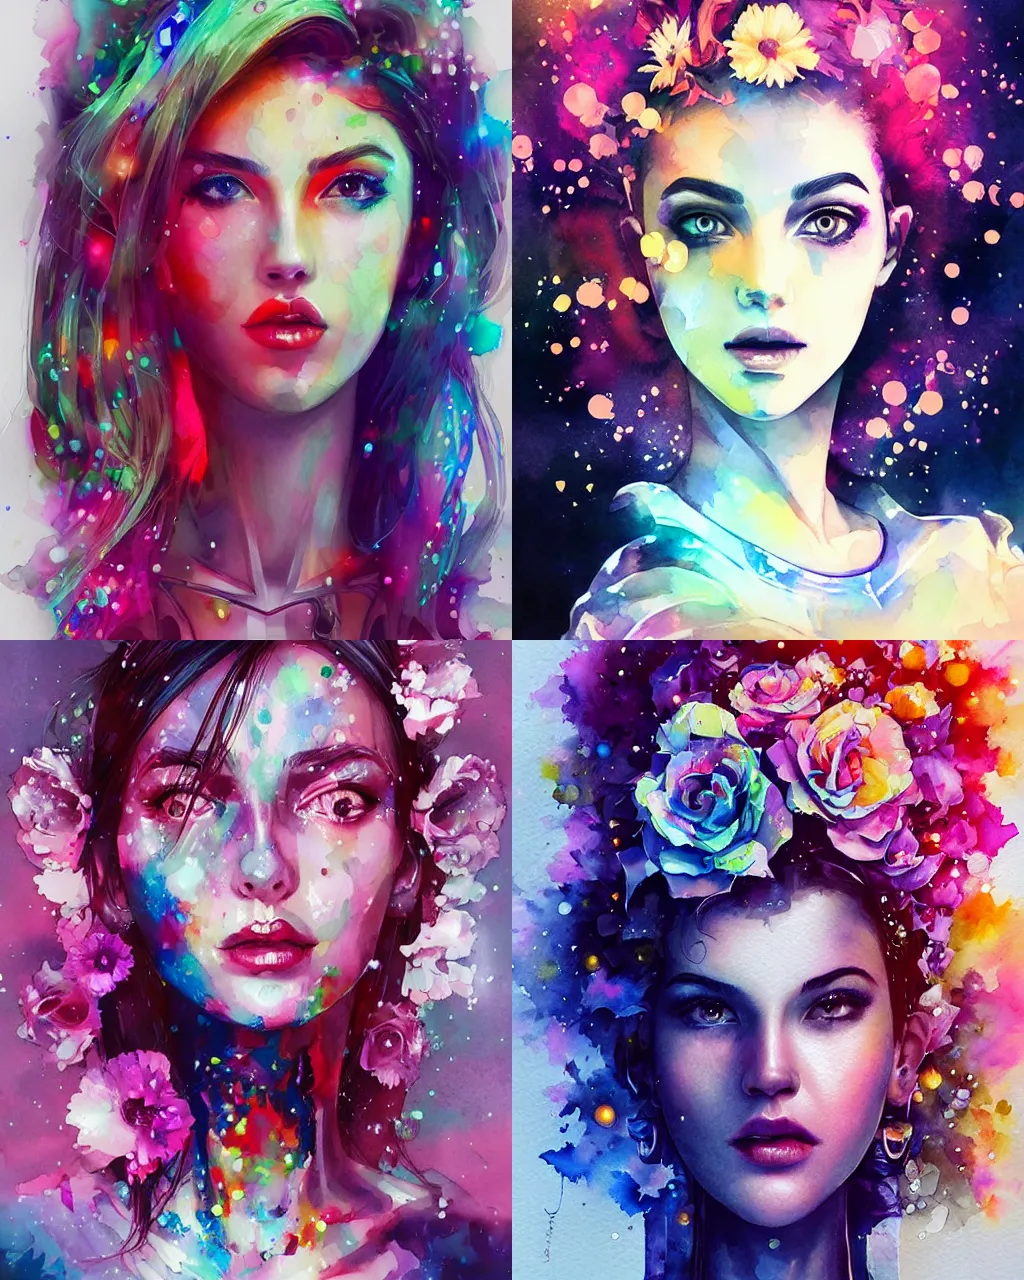 Prompt: robotic beauty watercolor flower portrait, pop fantasy art by WLOP and artgerm and alena aenami